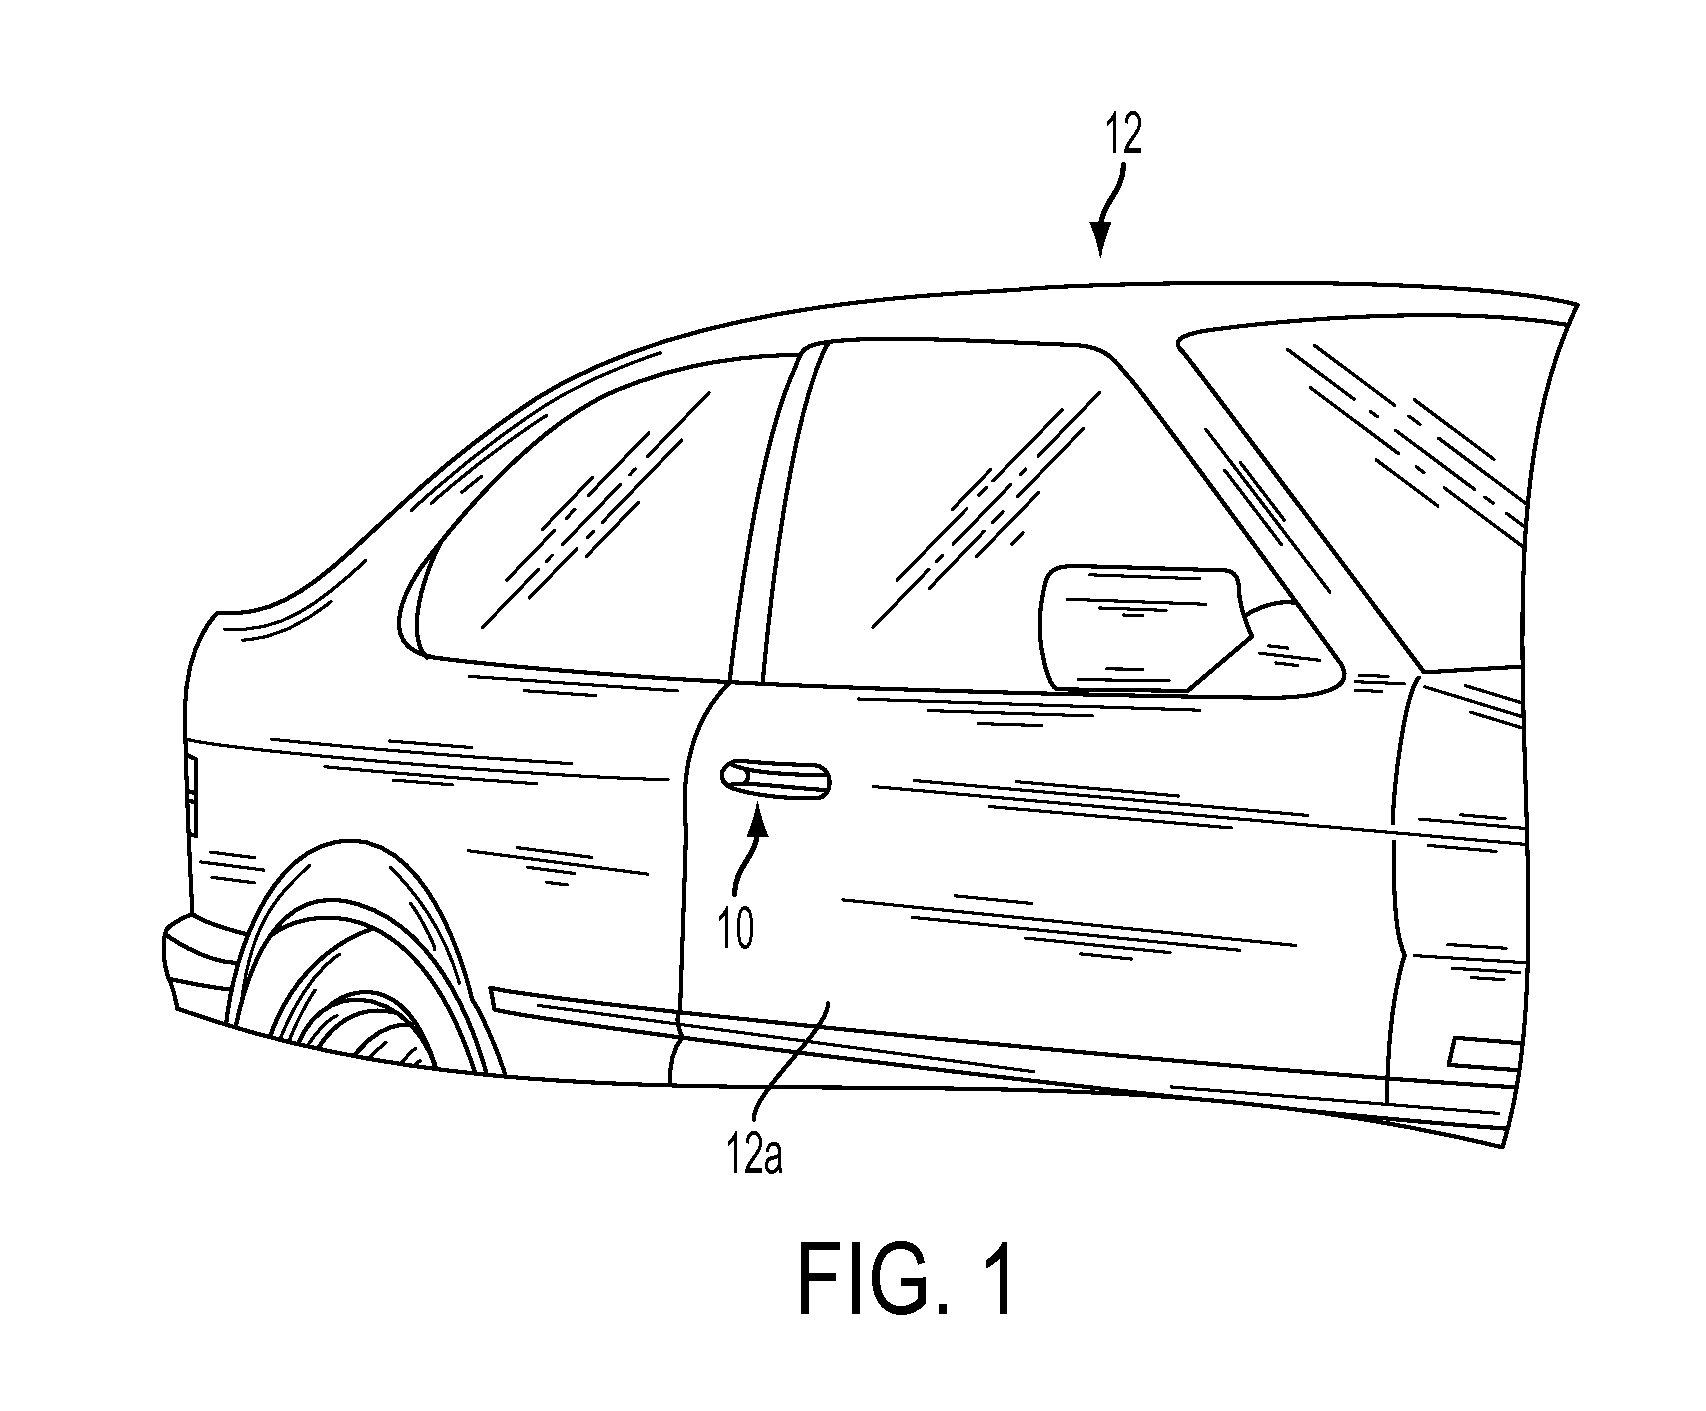 Vehicle door handle assembly